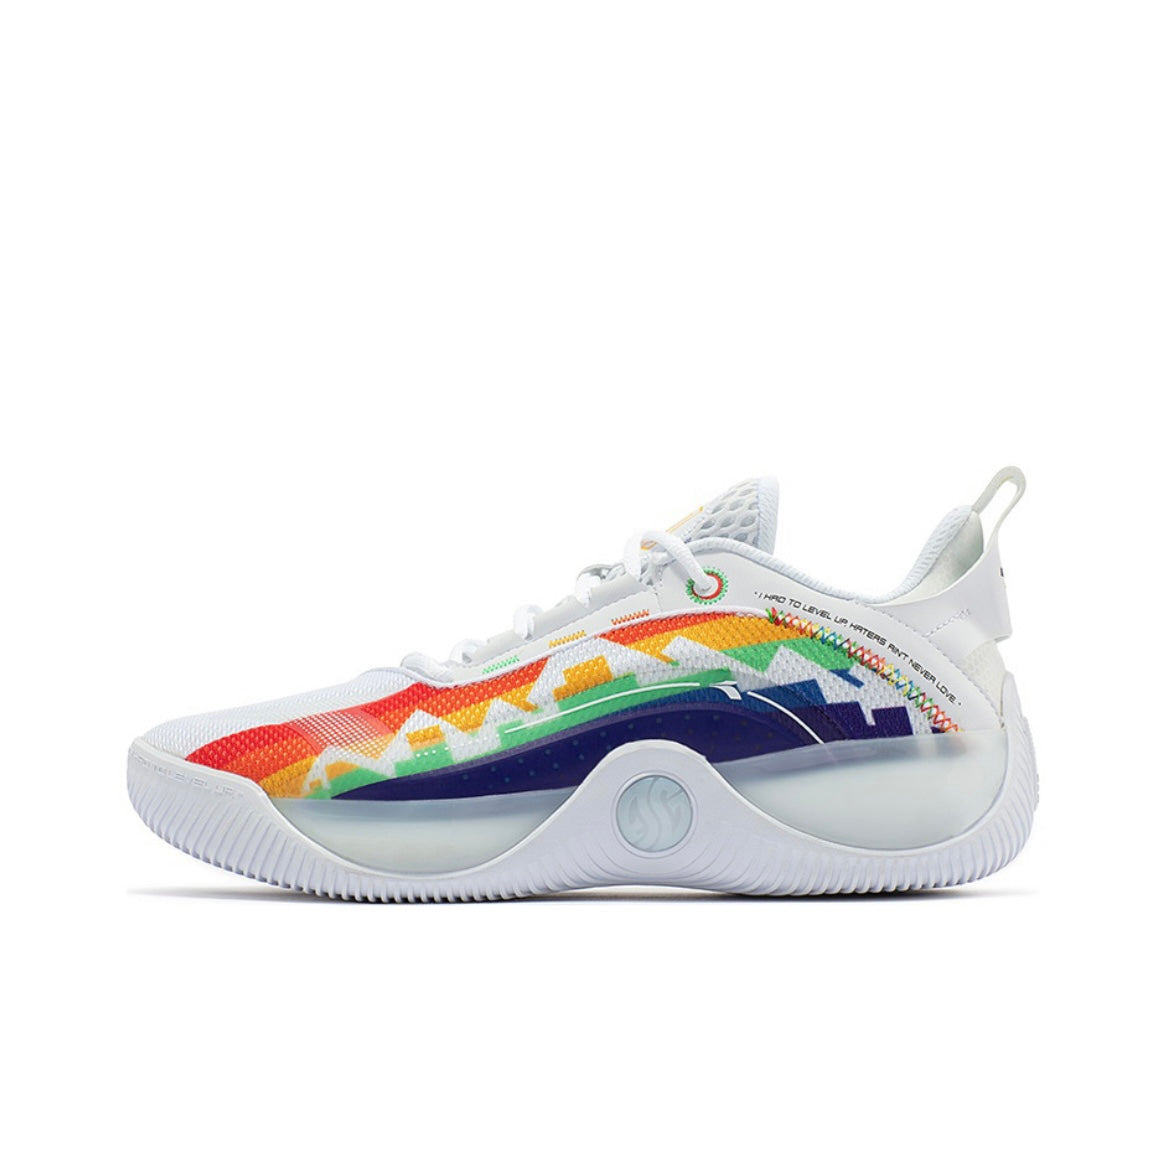 361° LVL Up Basketball Shoes - White